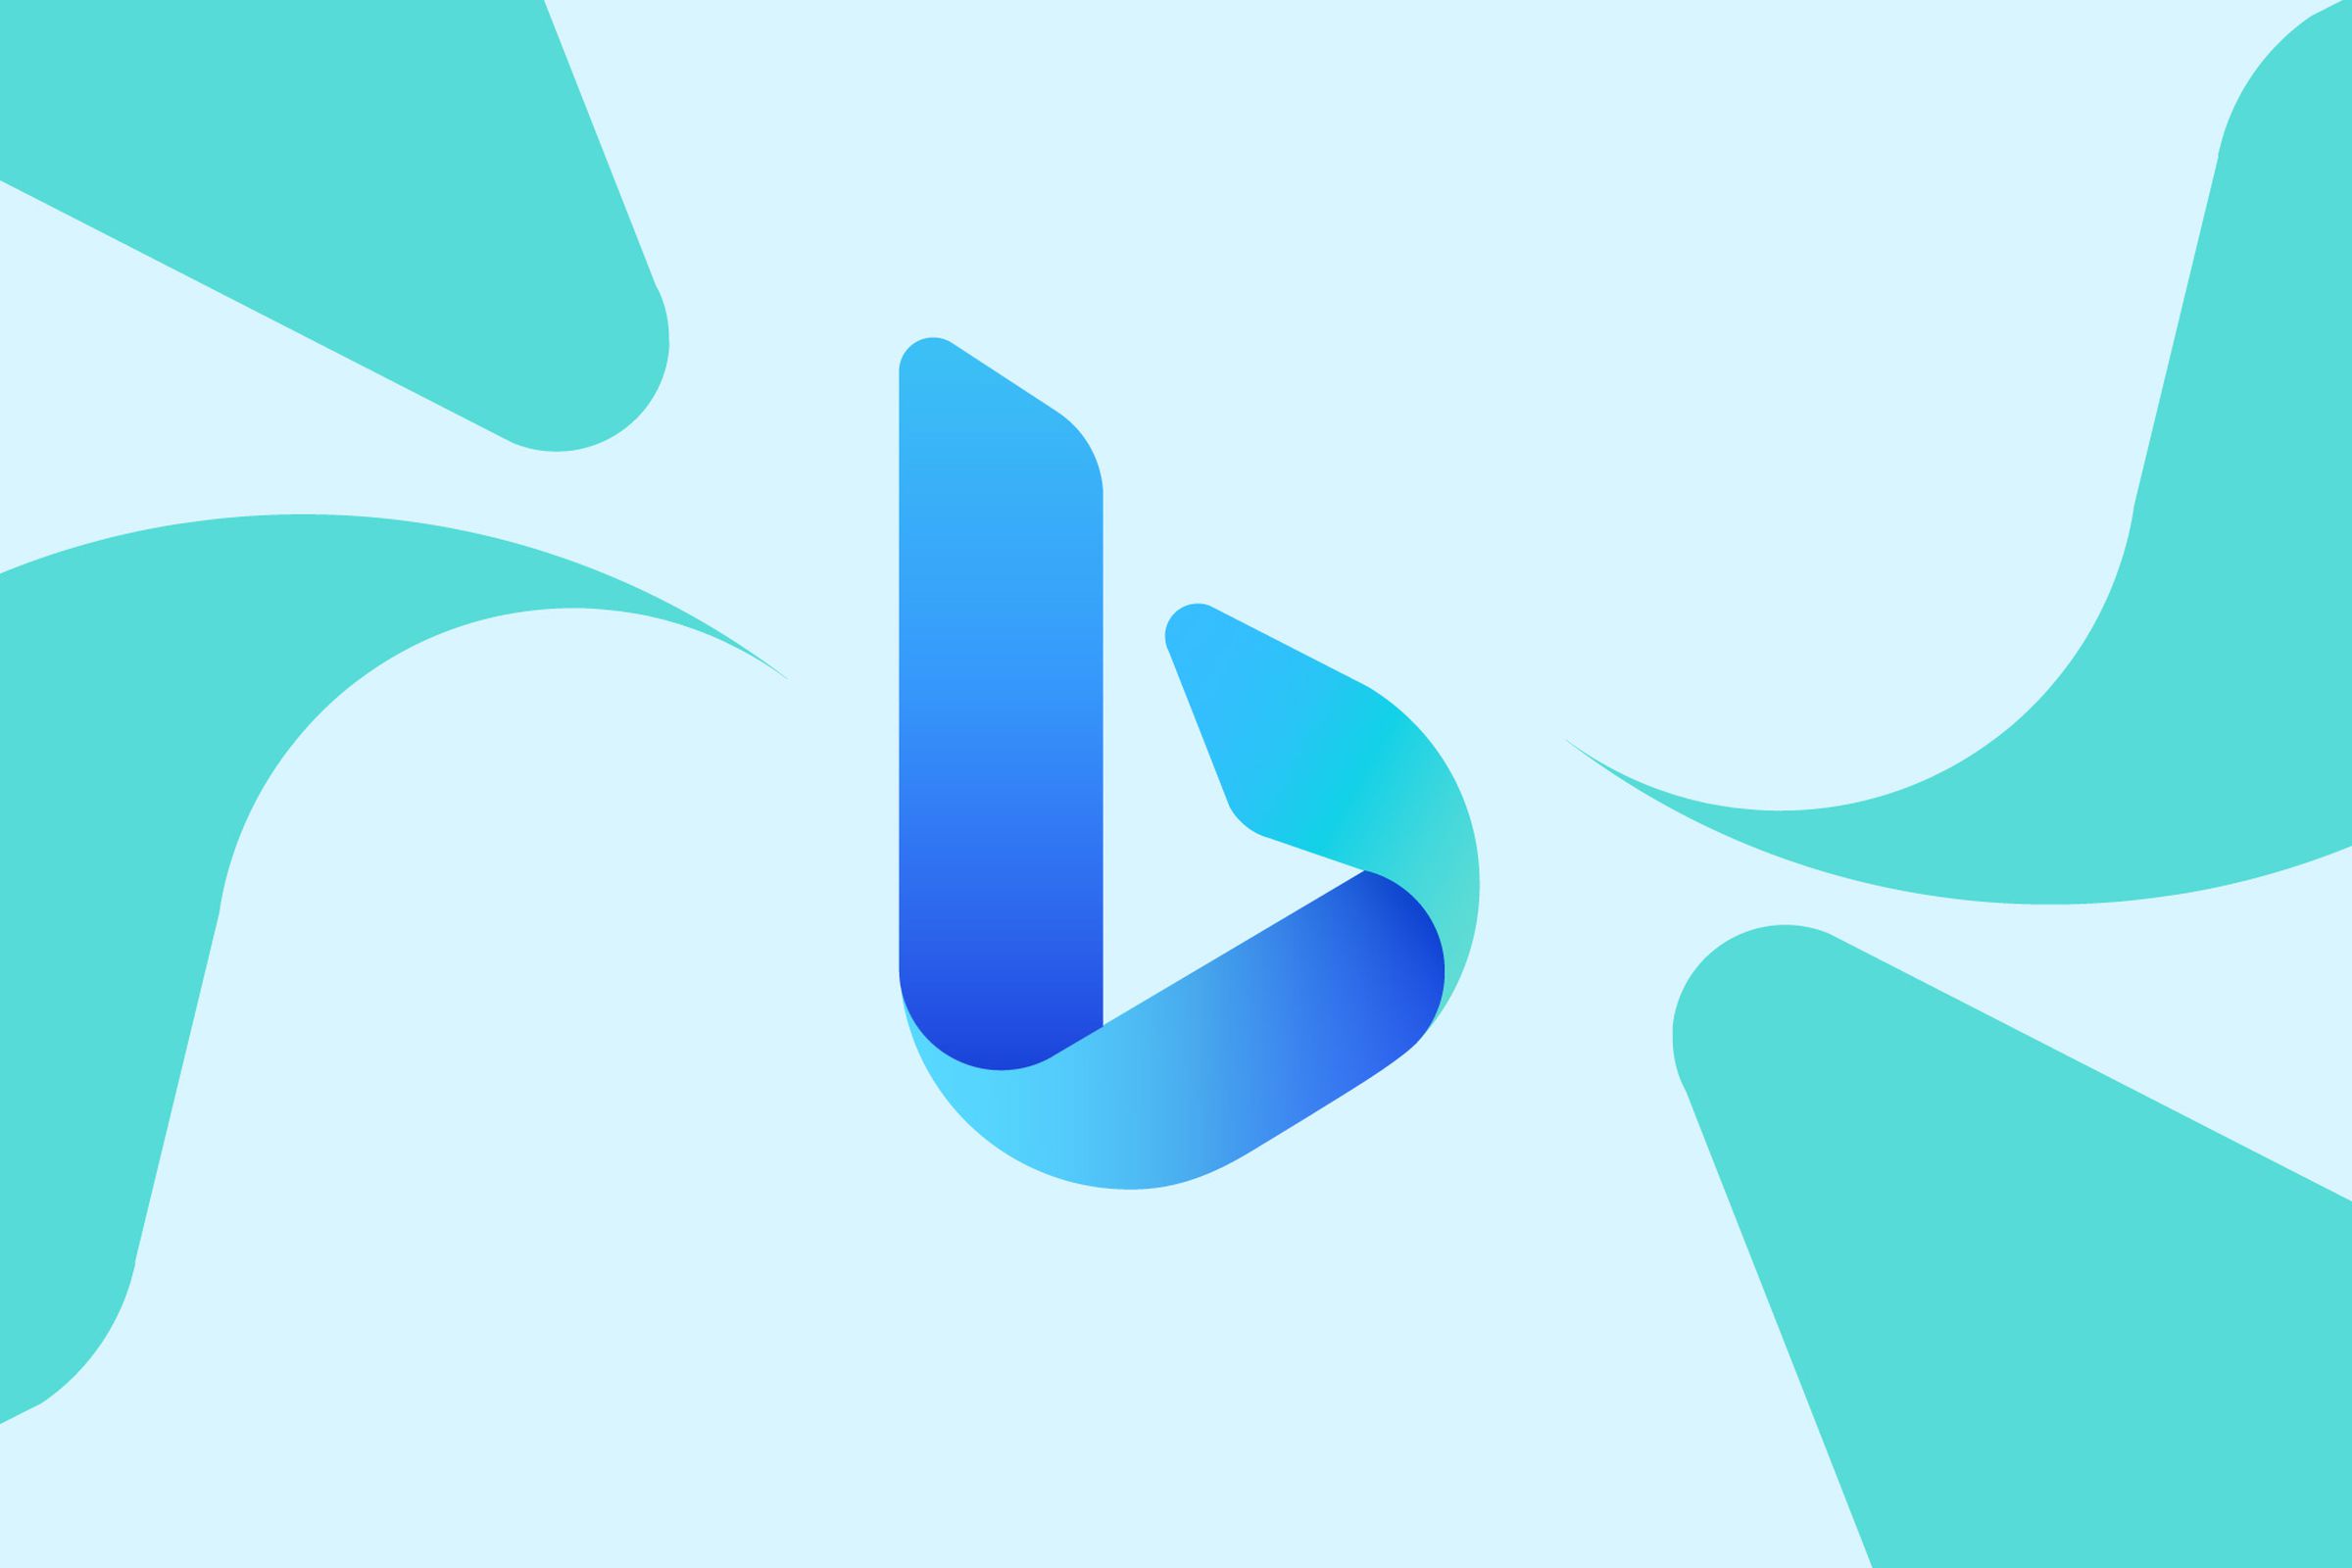 Bing AI makes its way onto Samsung Galaxy devices via integrated ...